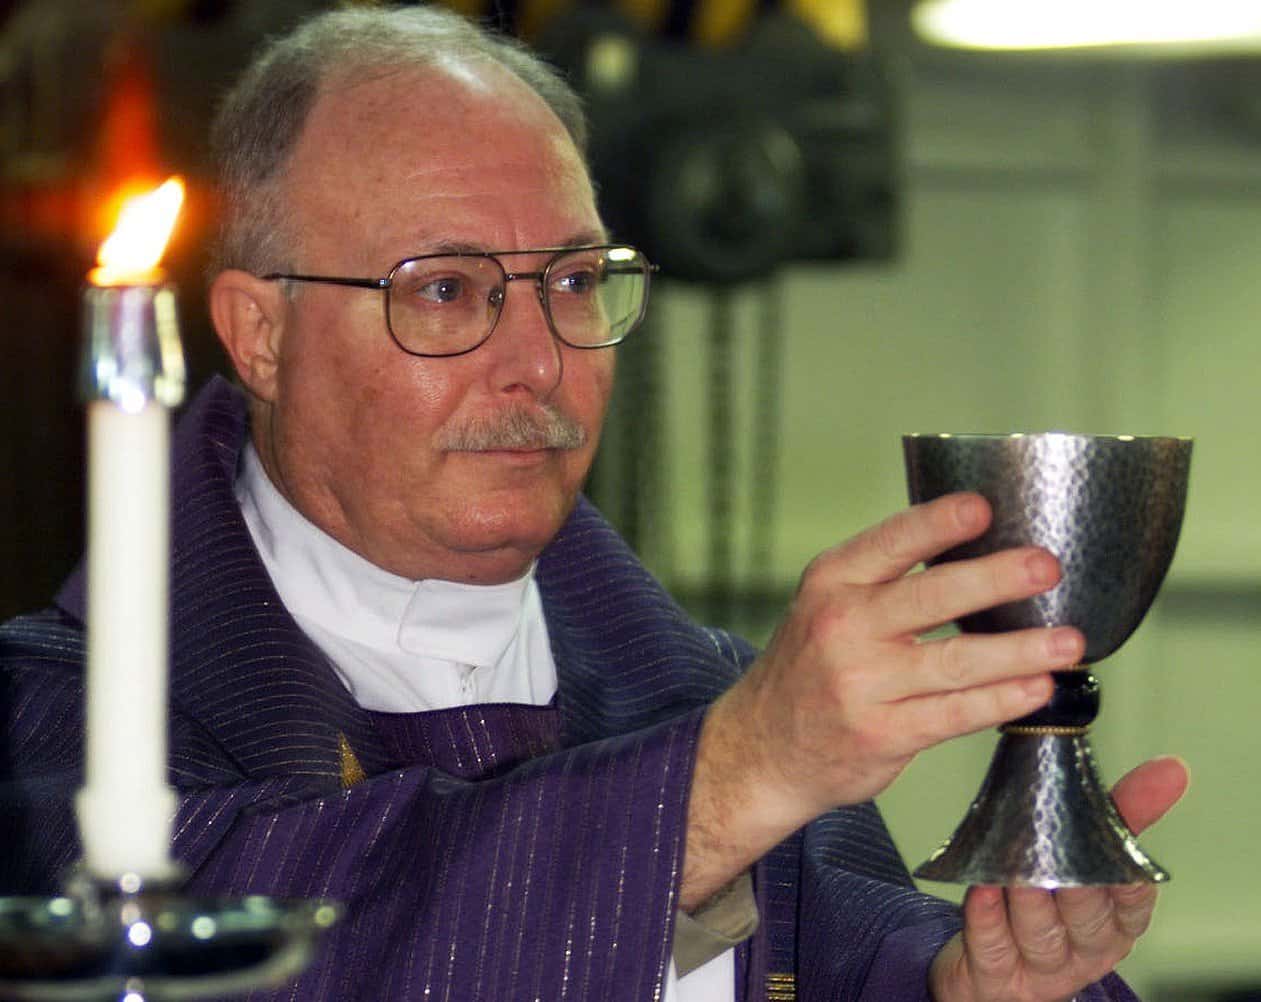 A priest holds a communion chalice aloft.